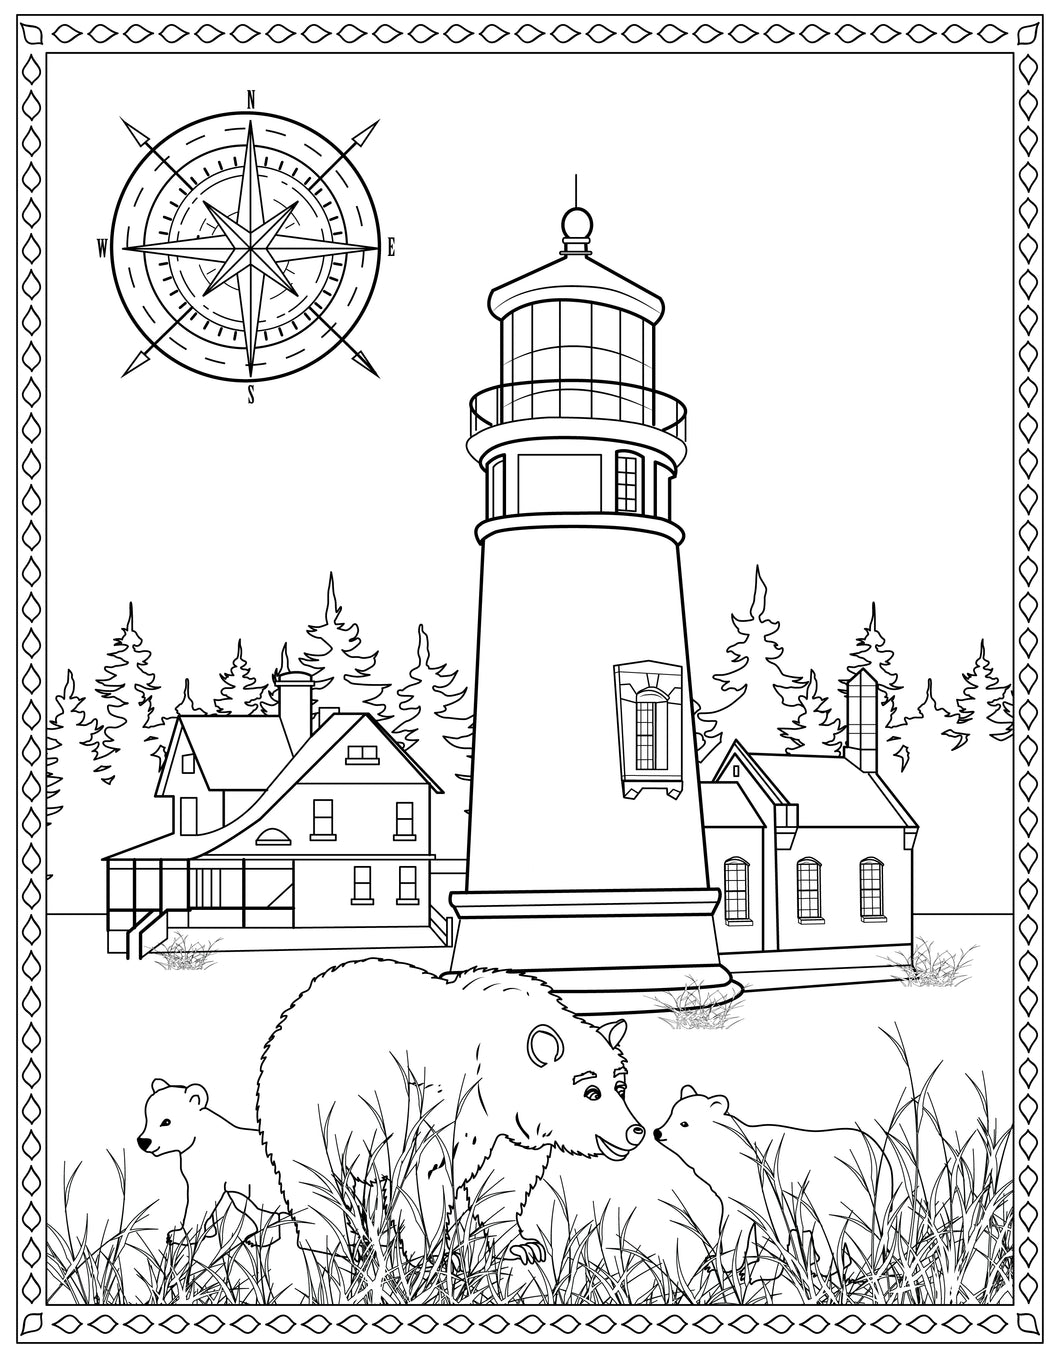 Single Coloring Book Page - Umpqua River Lighthouse, Oregon - Digital Print-from-Home